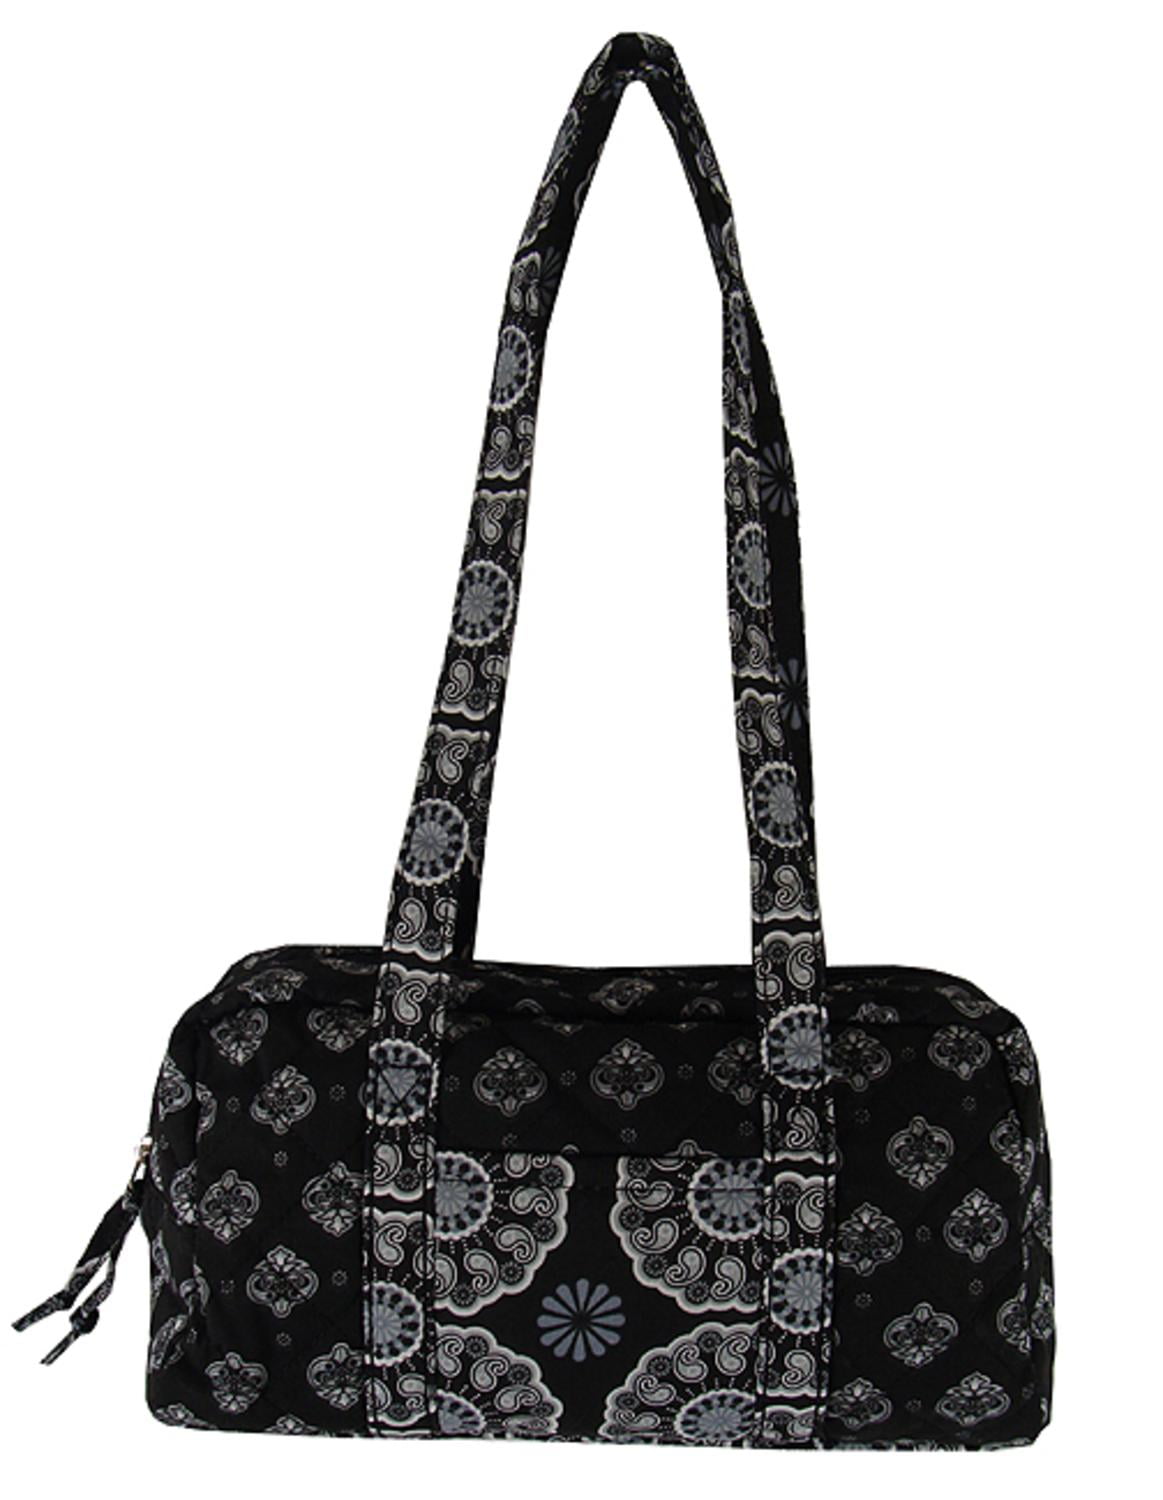 Gordon - Quilted Black Paisley Mini Duffel Bag Women's Purse Handbag ...